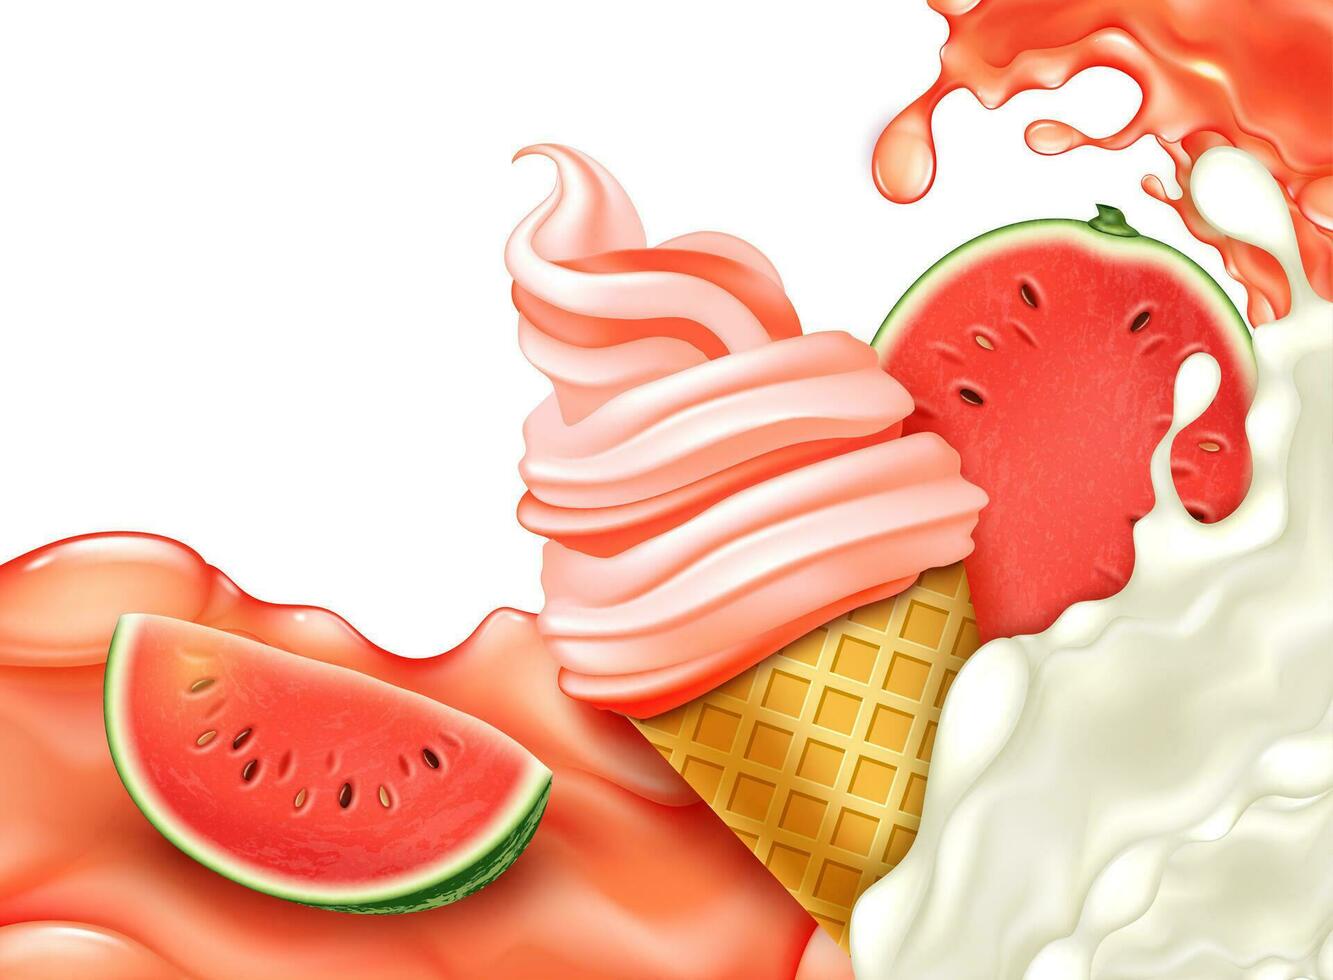 realista detallado 3d dulce sandía hielo crema concepto. vector